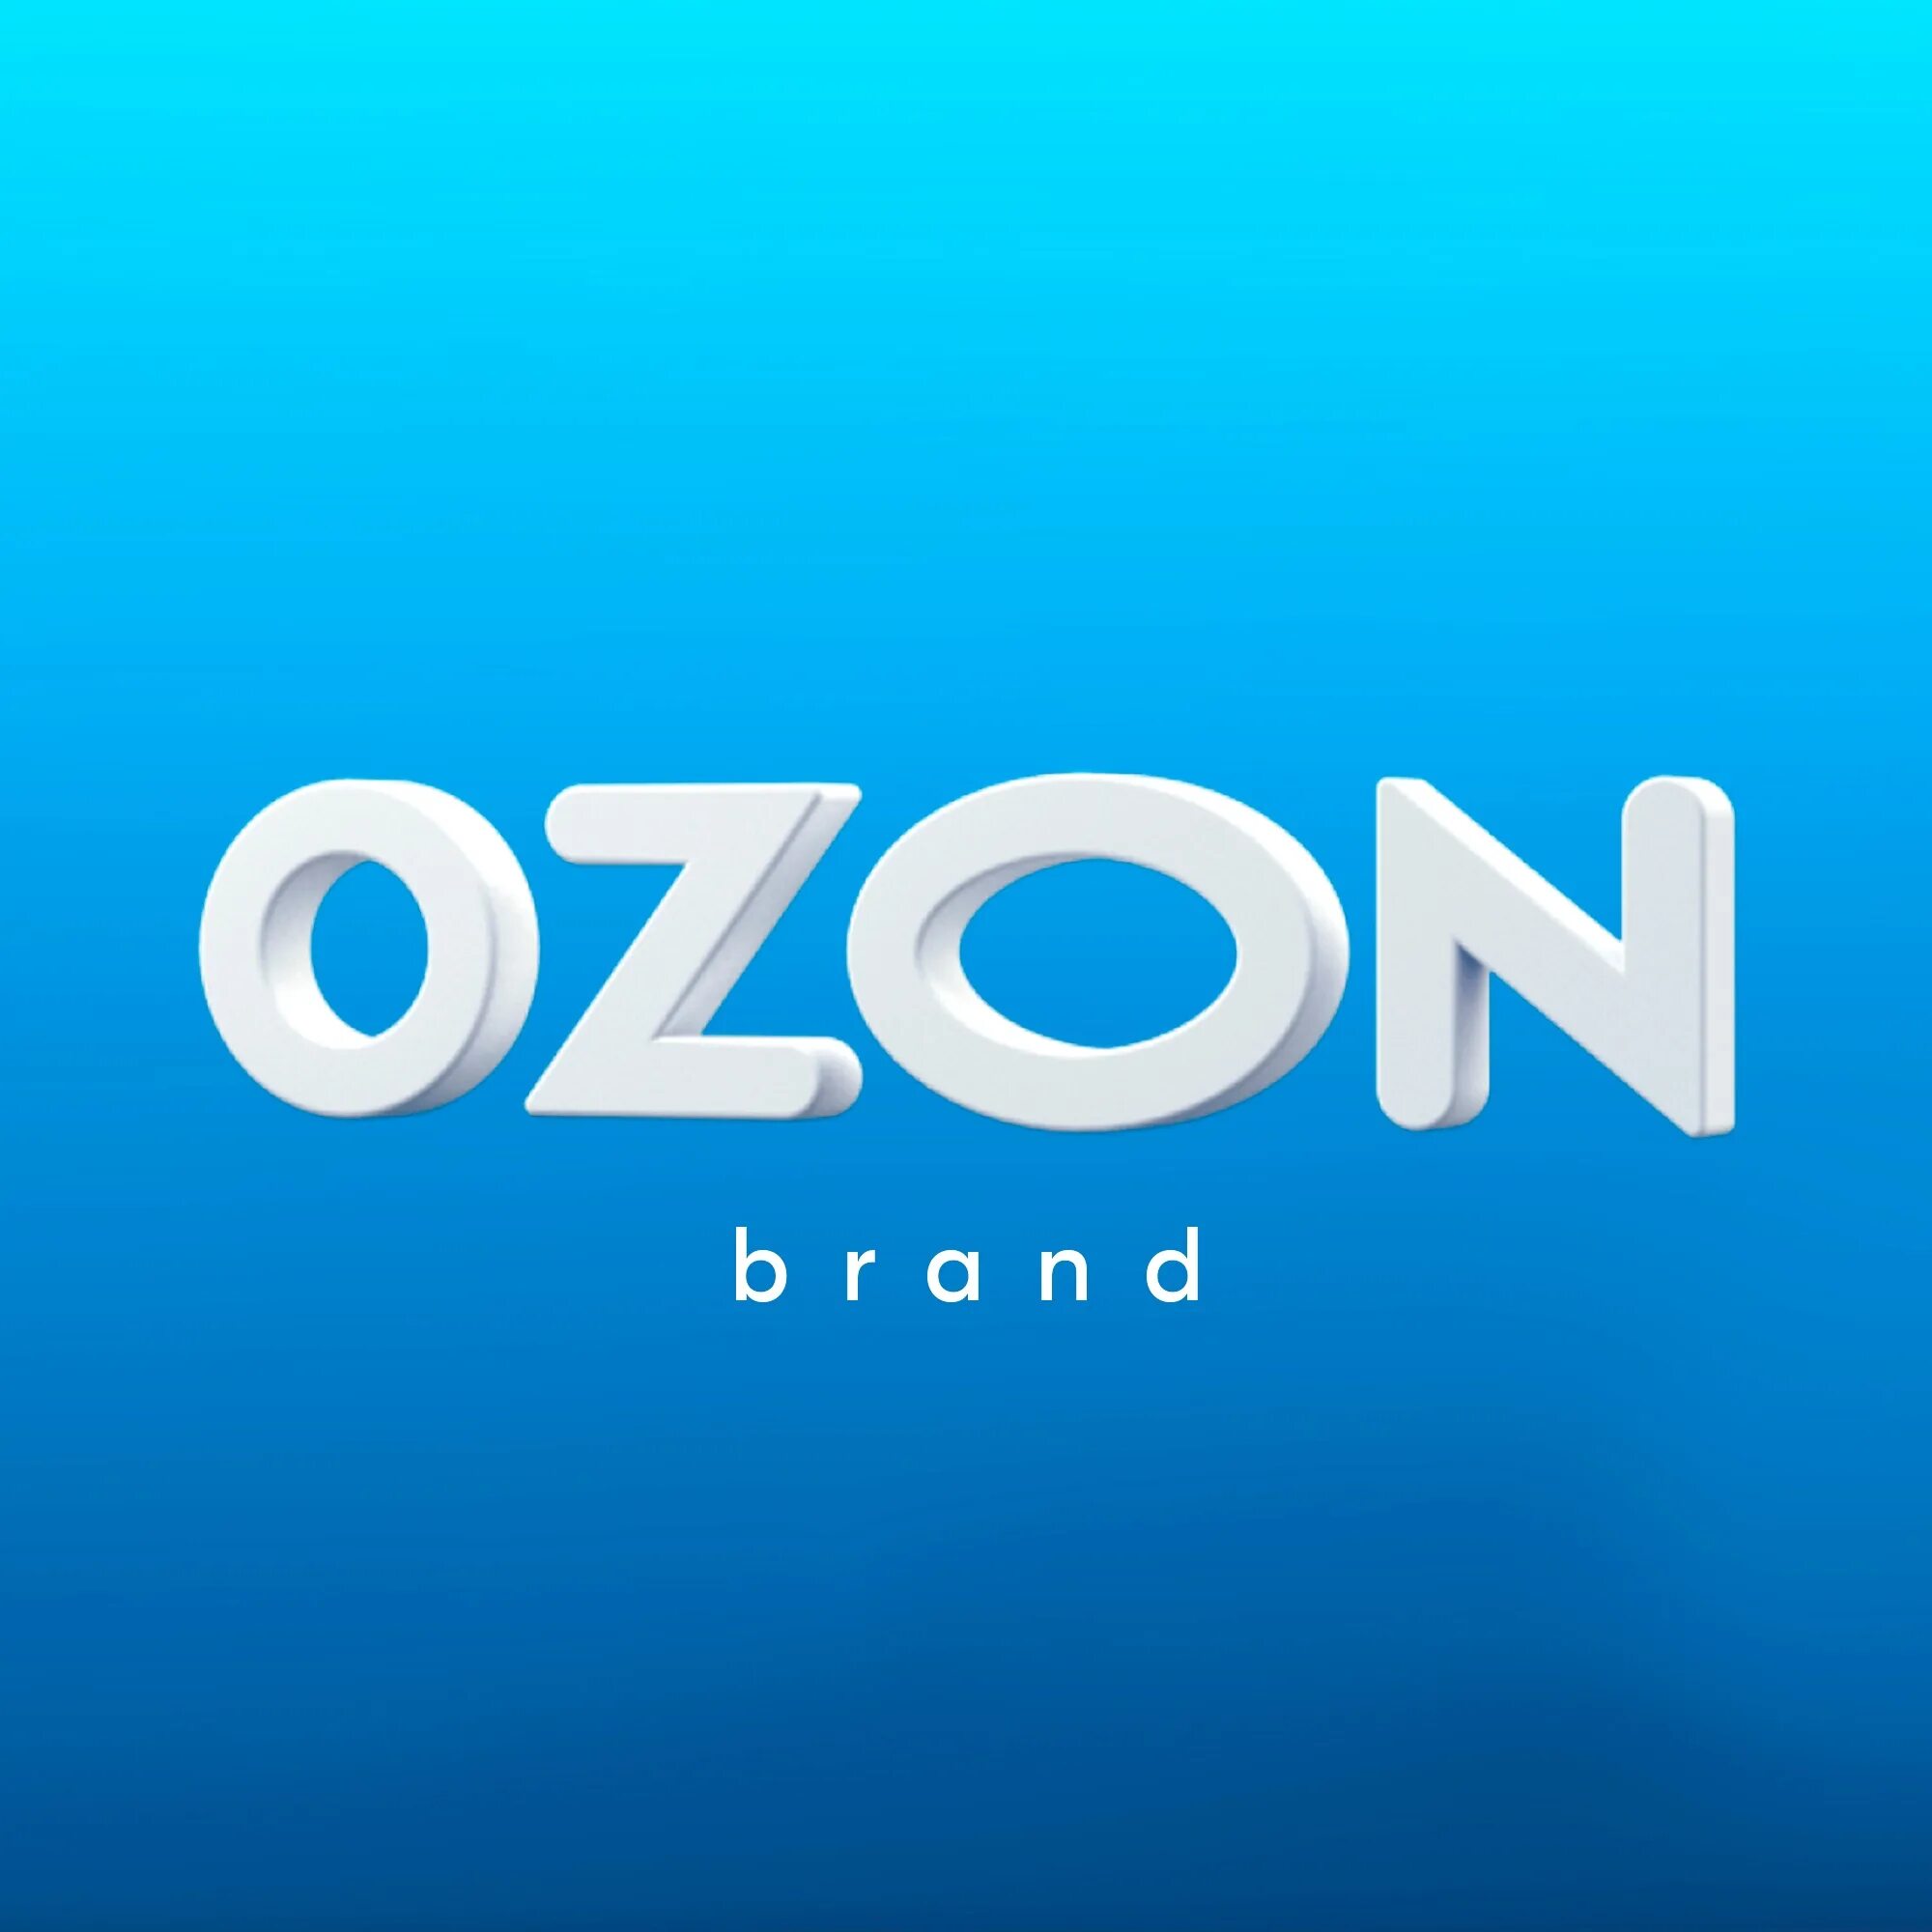 Озон бренд. OZON Branding. Озон бренд стиль. Новый Брендинг Озон. Ozon телеграмм